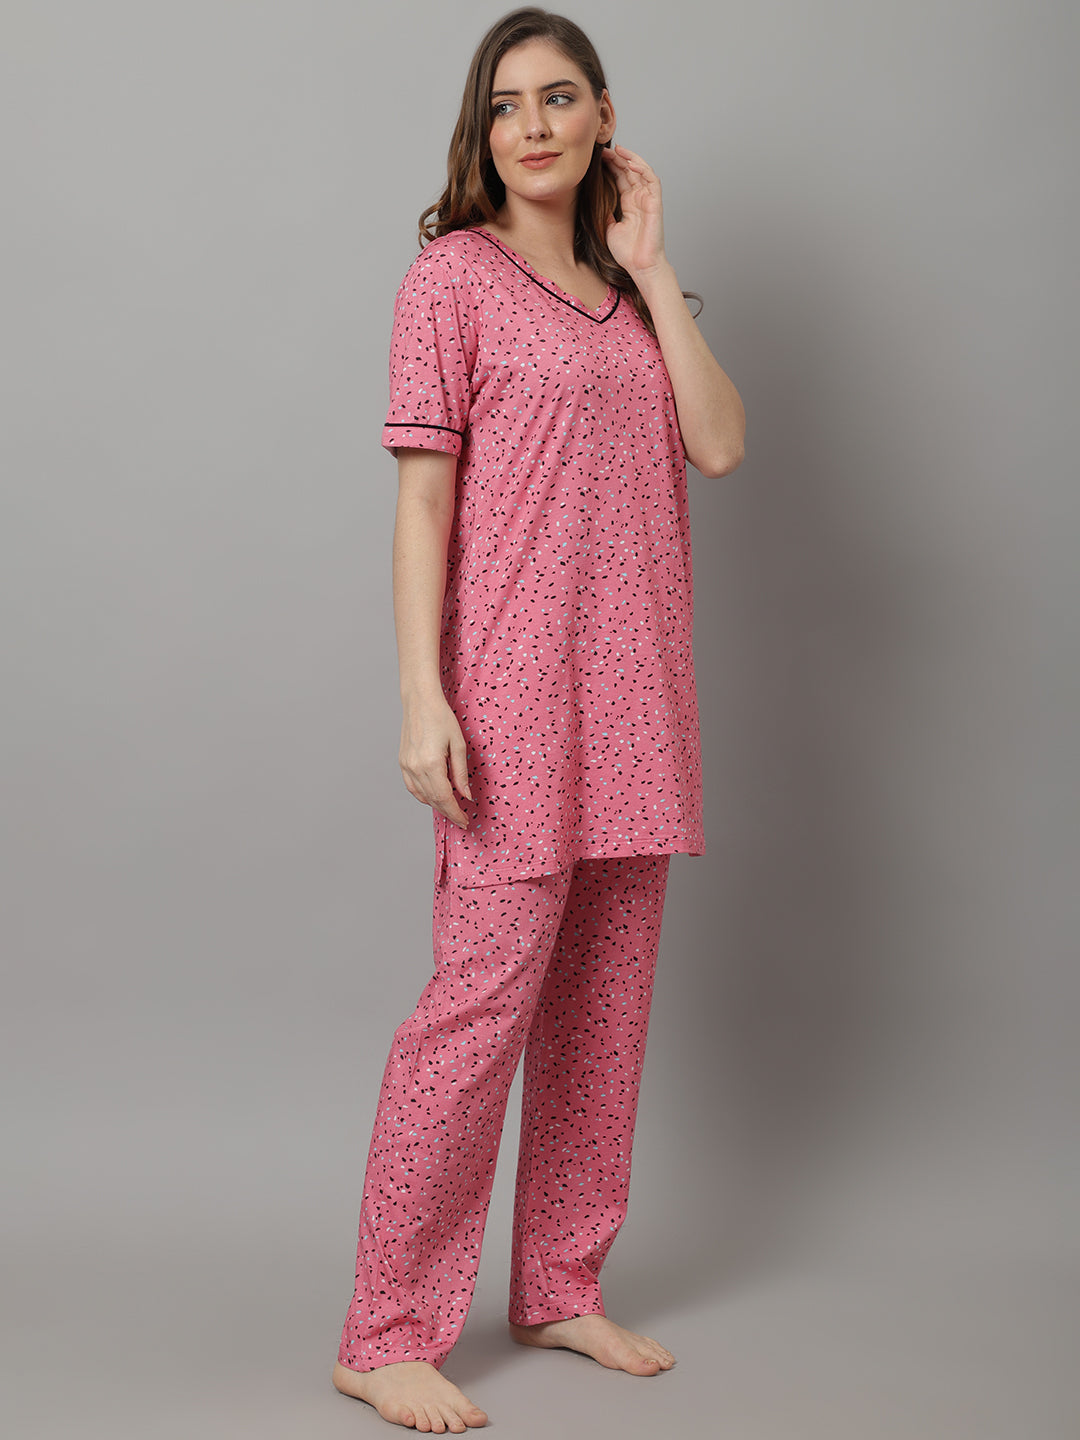 Pyjama Sets_MJKSS23183A